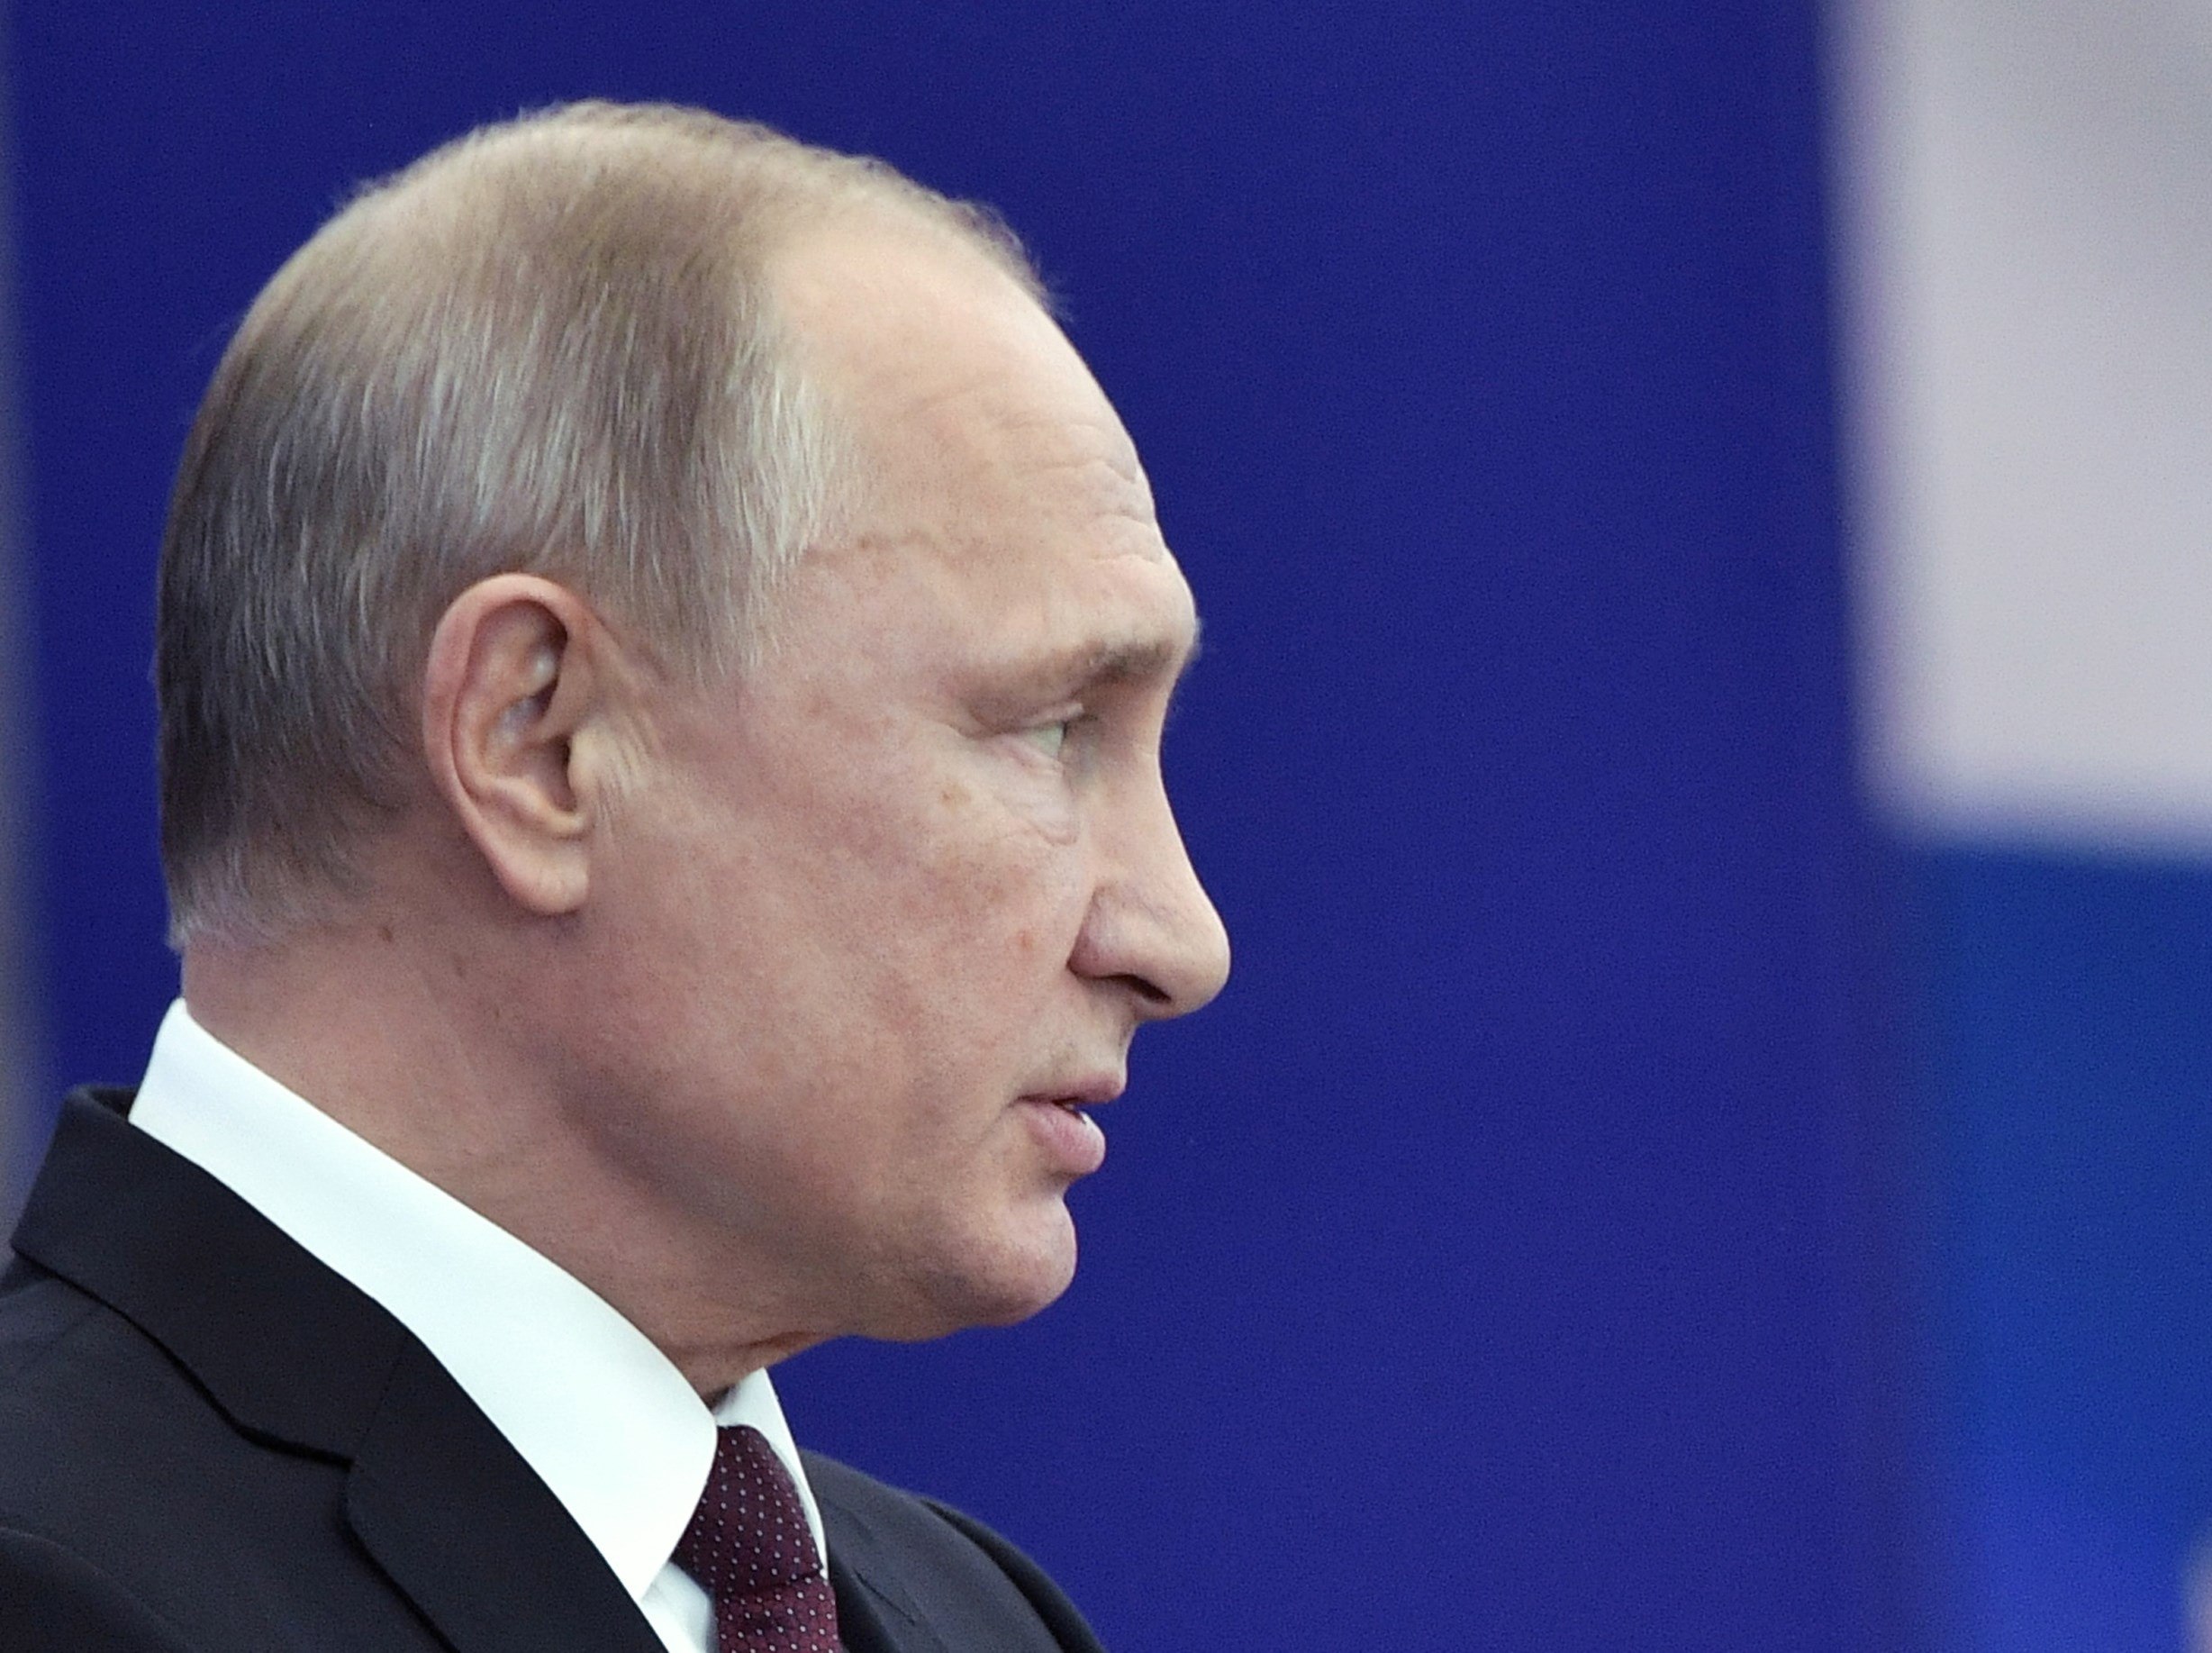 Putin tacha de "militarista" el presupuesto militar de EEUU